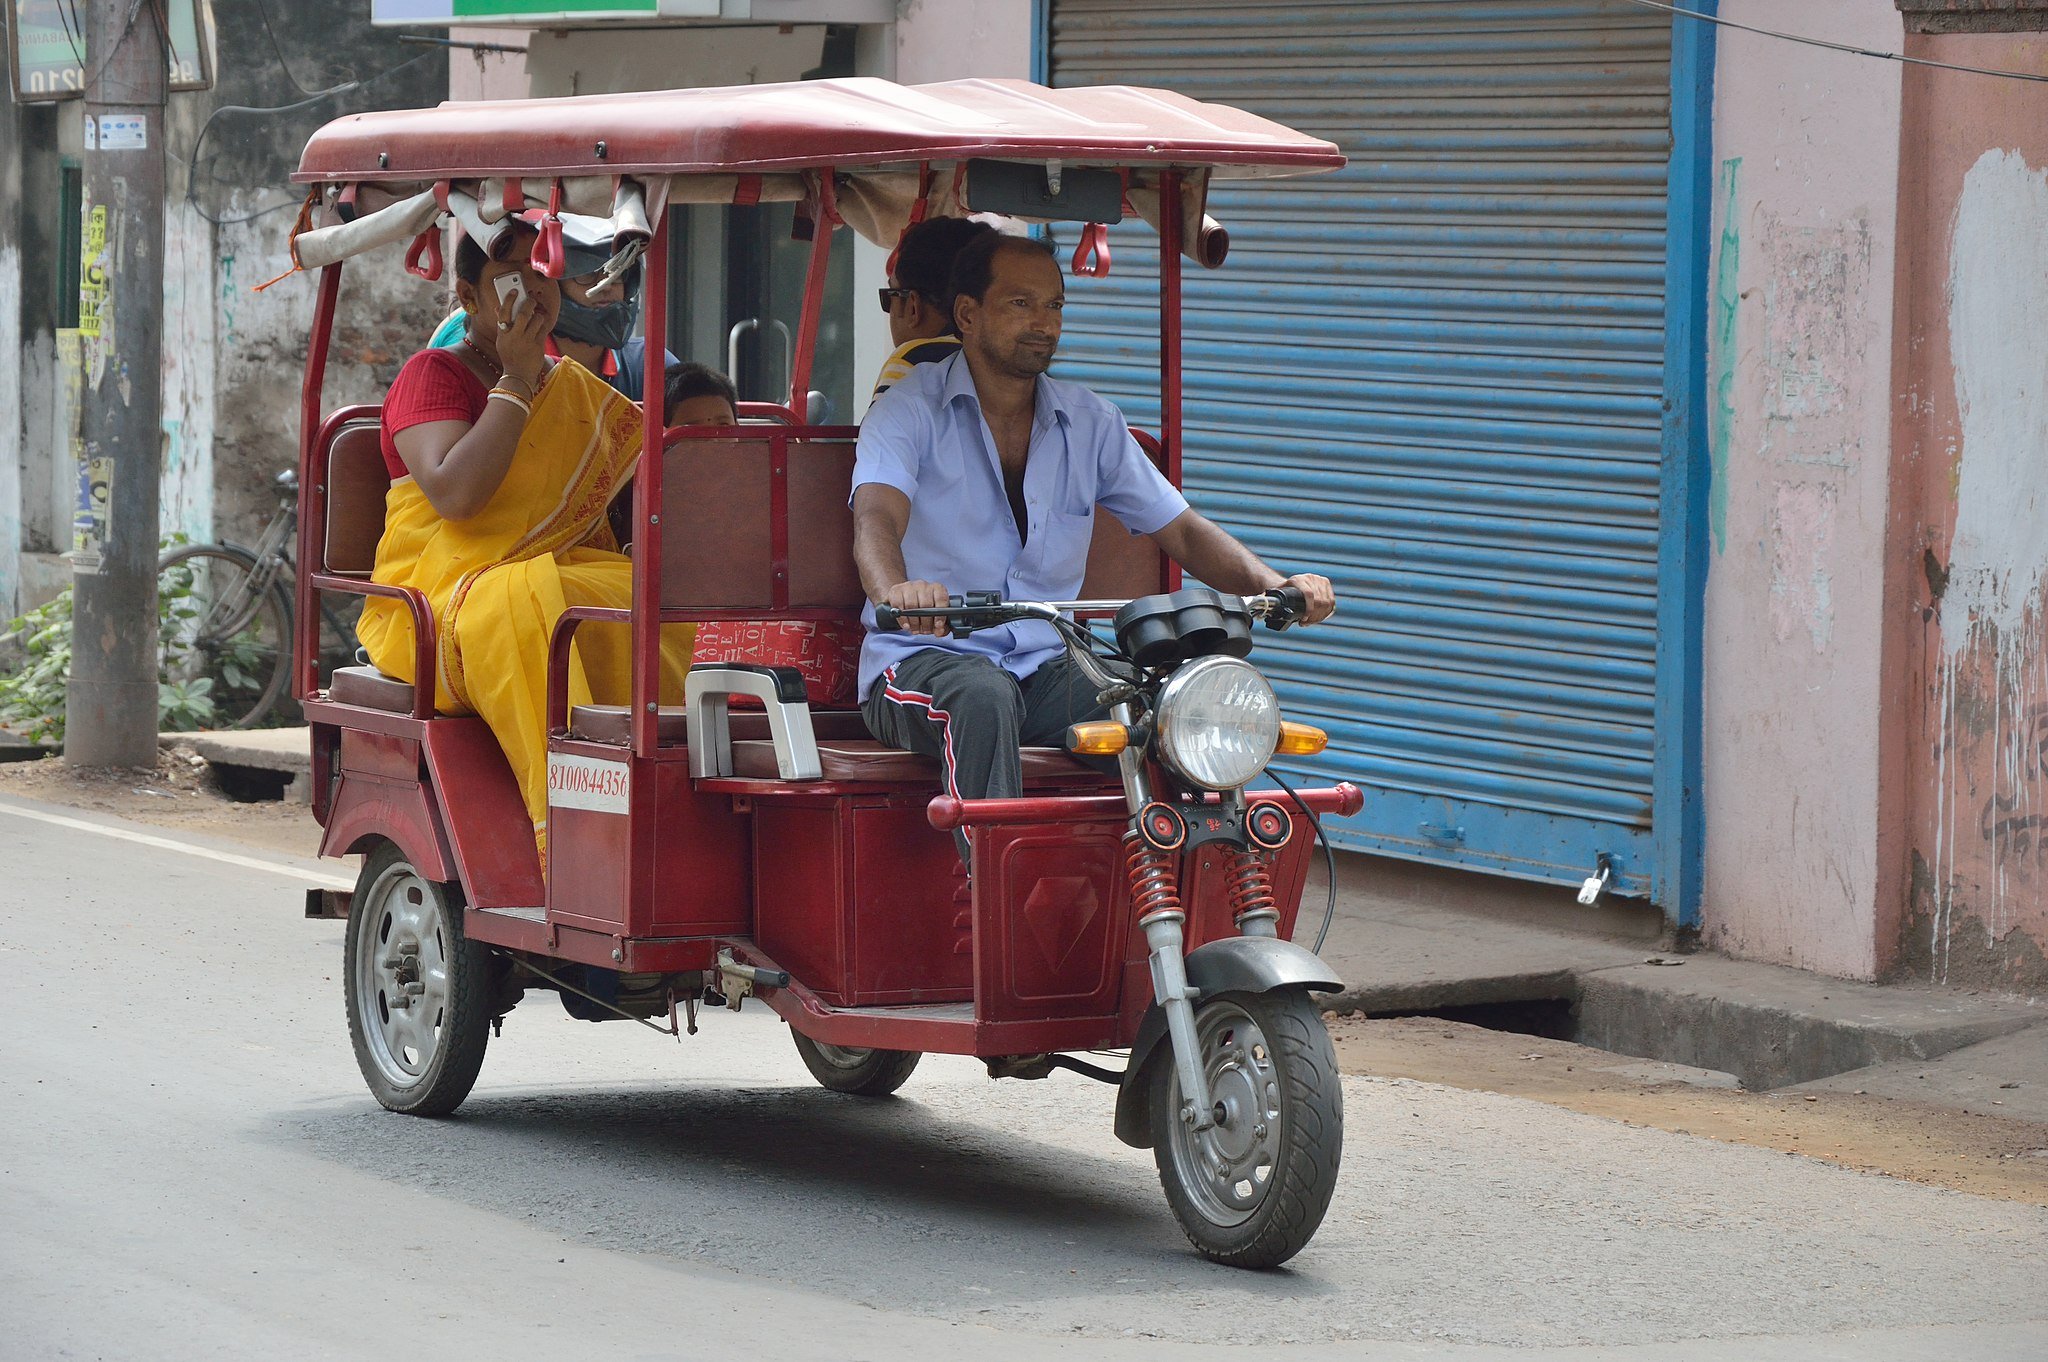 A rickshaw transports people